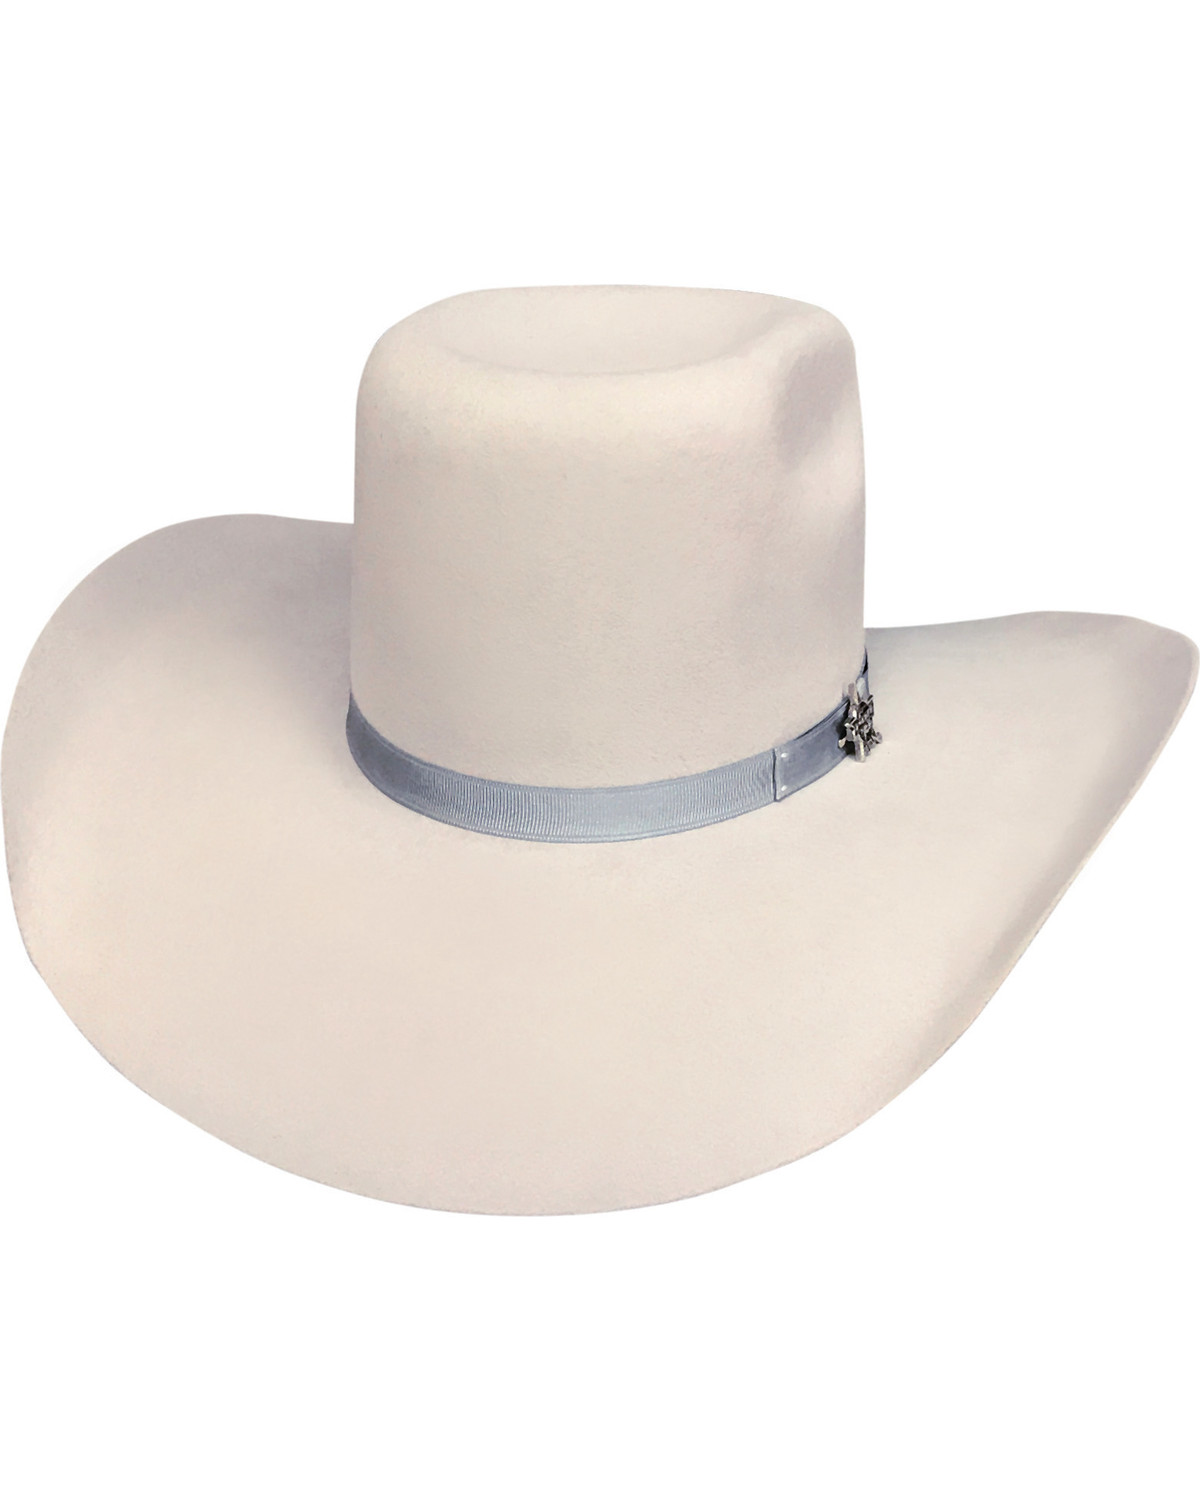 8X FUR Blend Western Cowboy Hat New Bullhide Hats LEGACY 